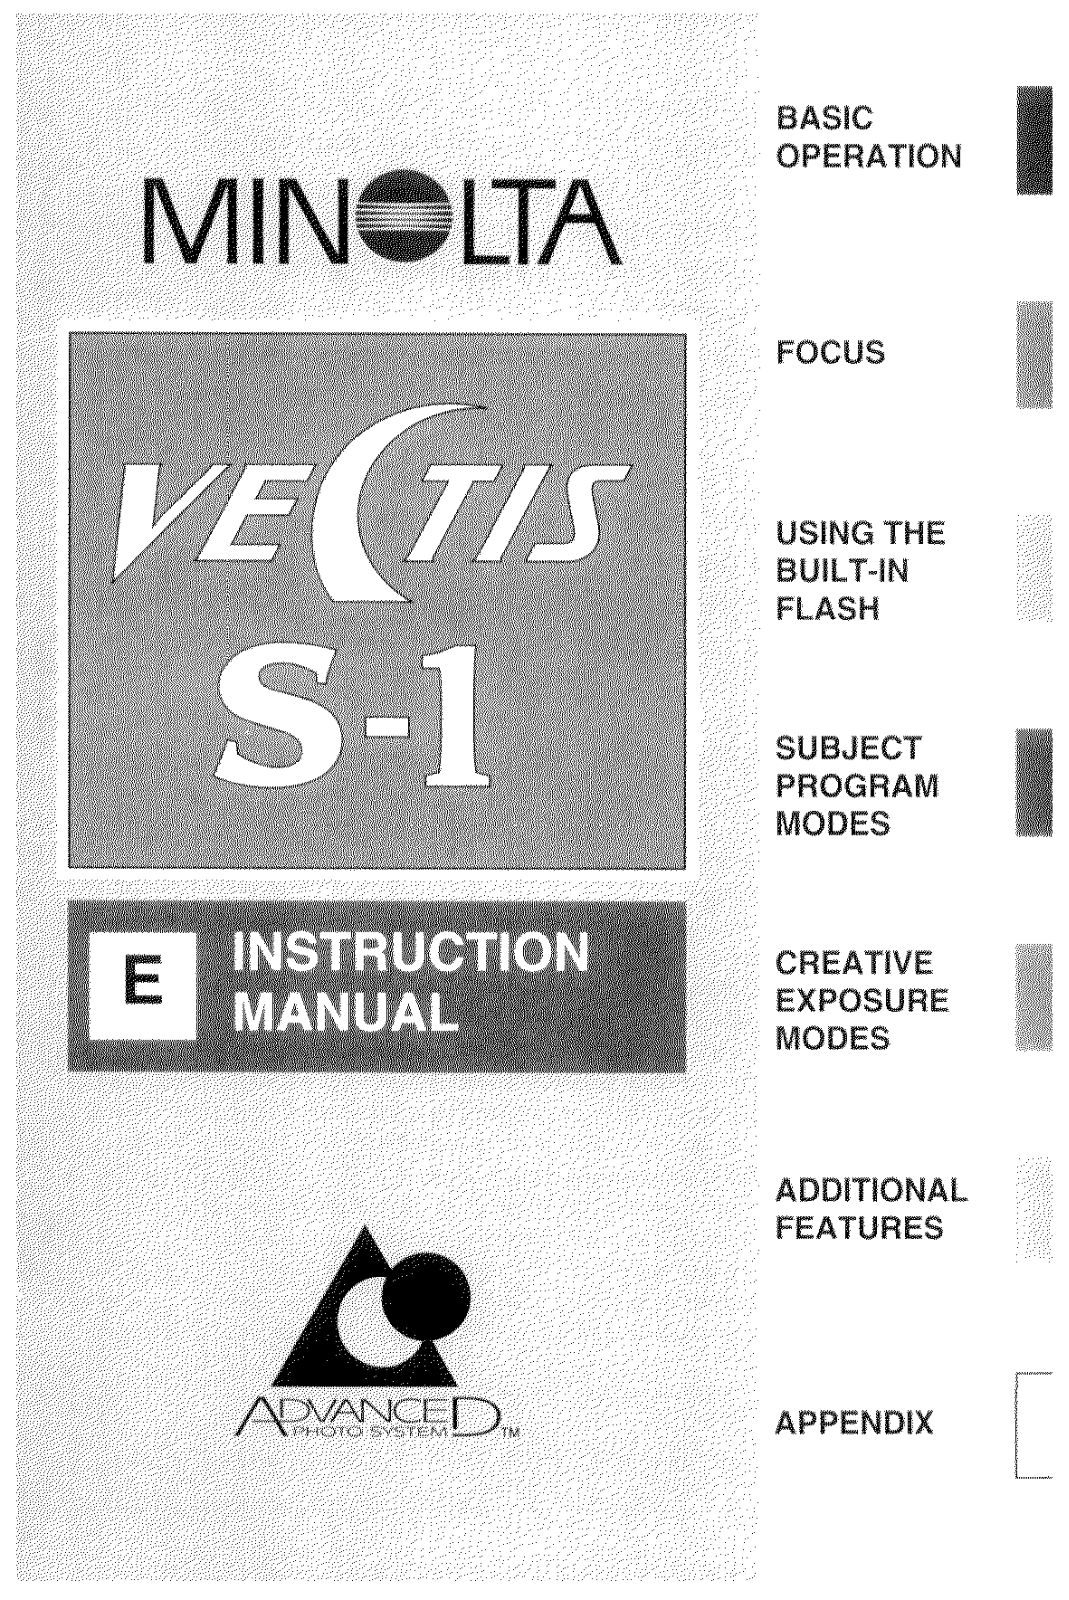 MINOLTA Vectis S-1 Instruction Manual